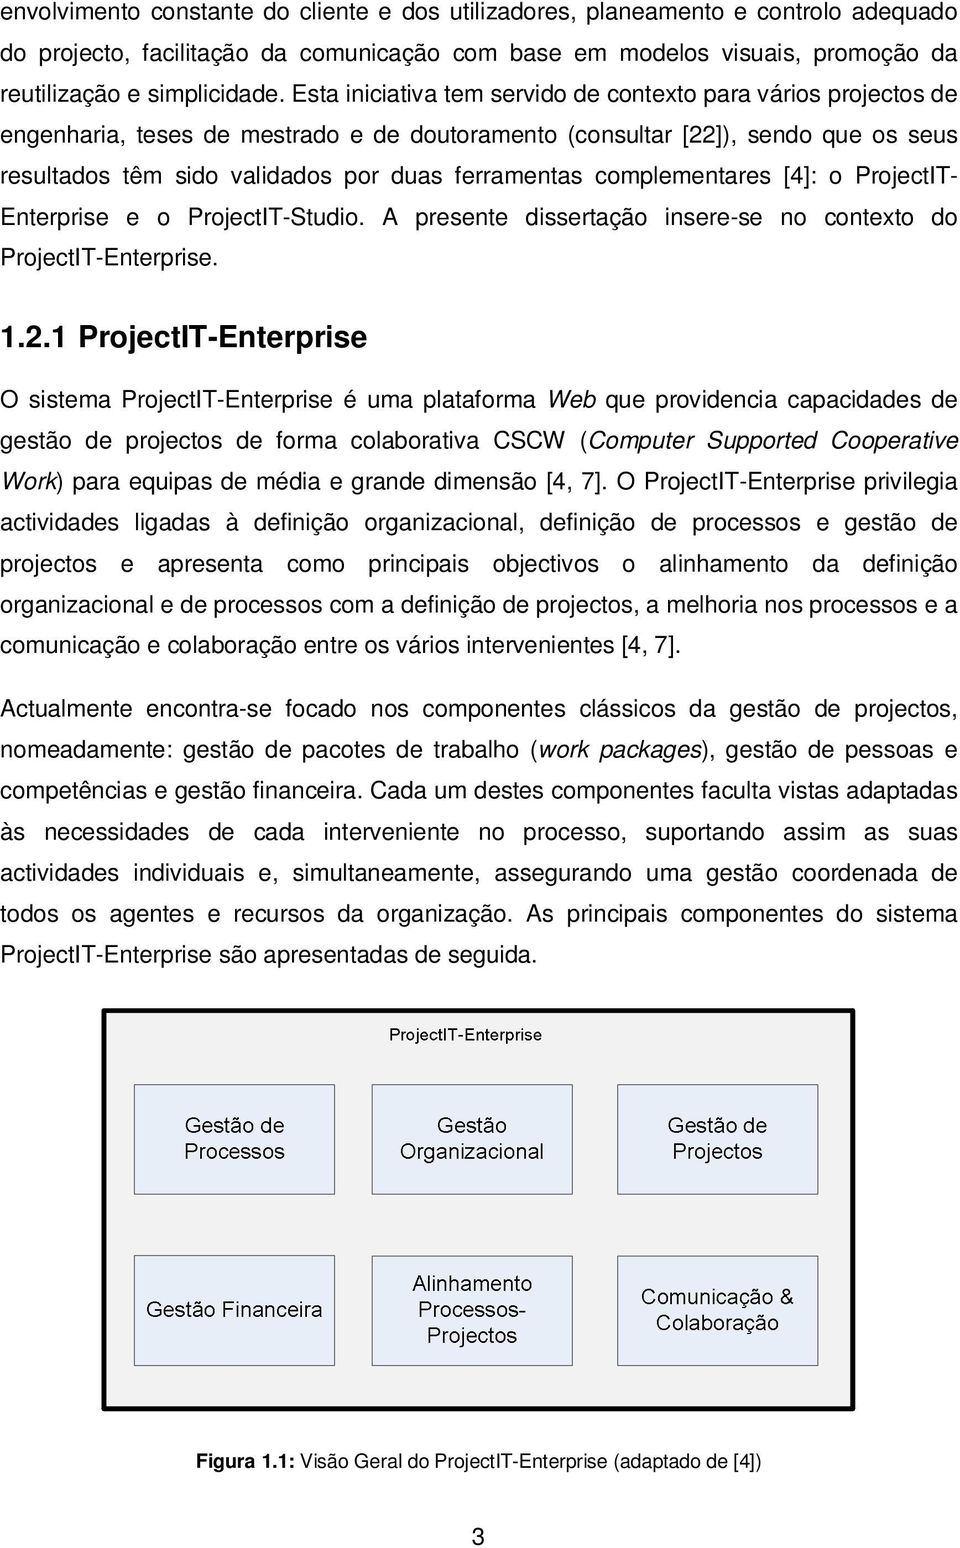 complementares [4]: o ProjectIT- Enterprise e o ProjectIT-Studio. A presente dissertação insere-se no contexto do ProjectIT-Enterprise. 1.2.